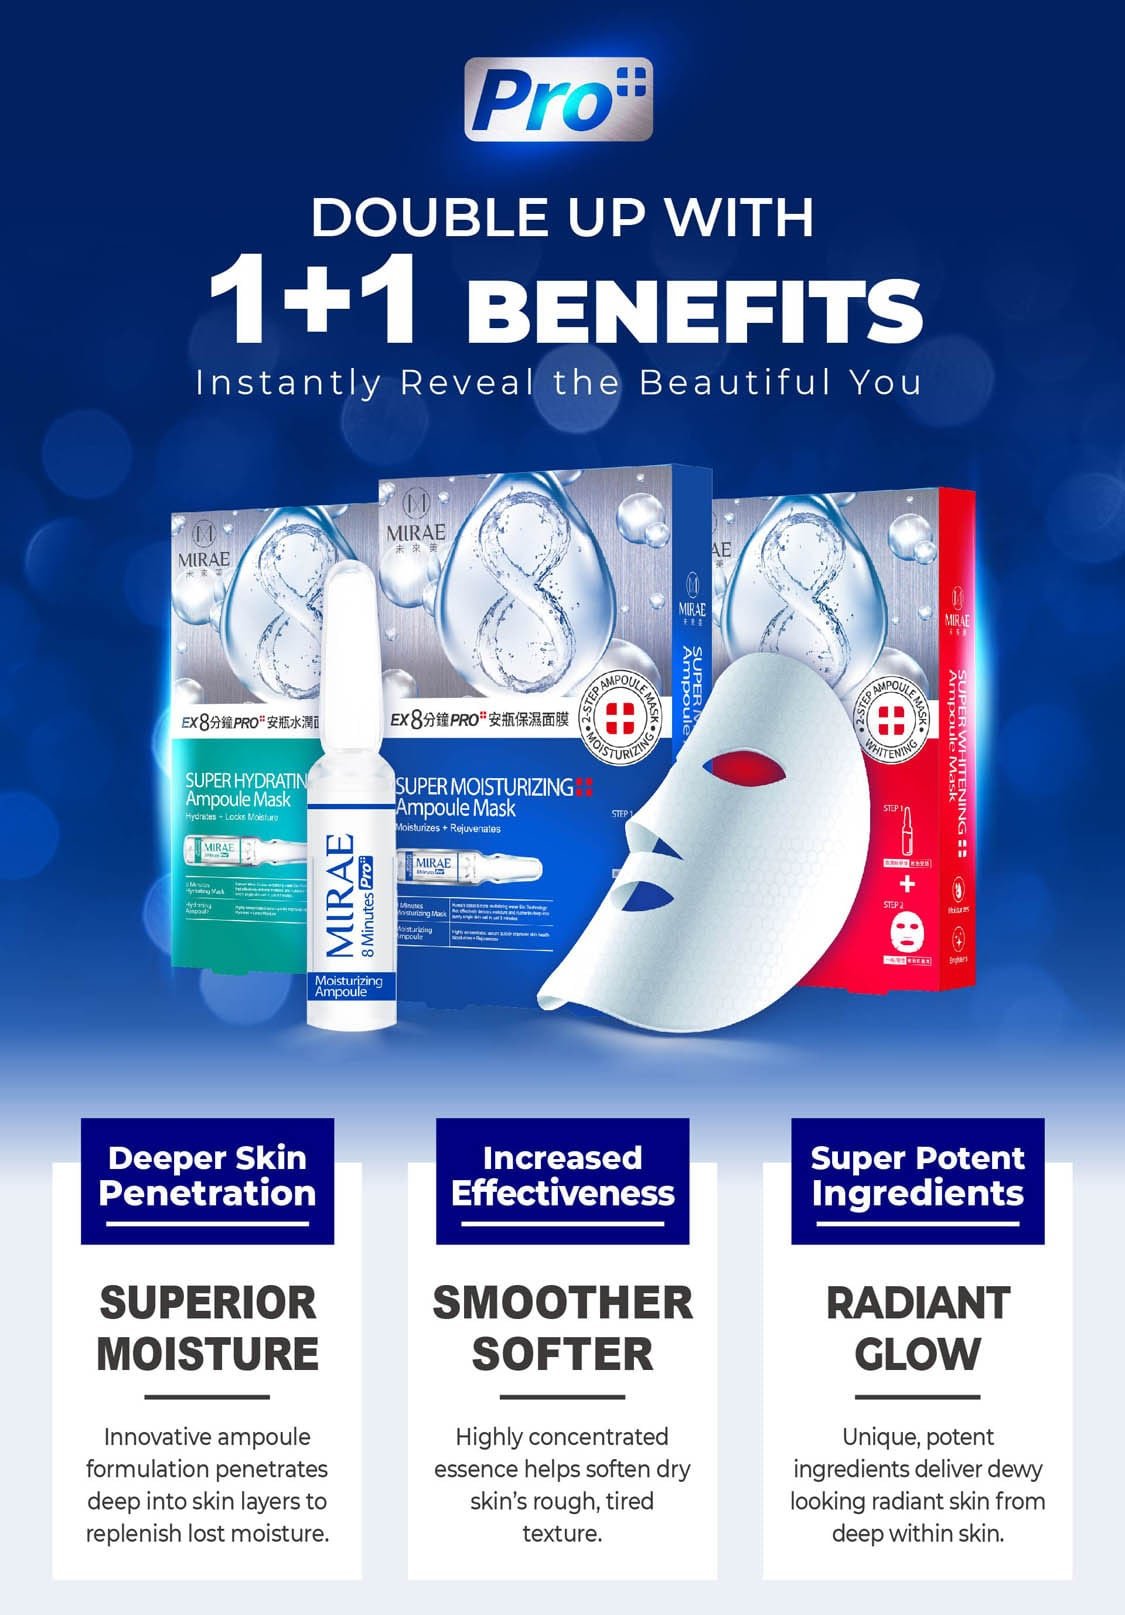 Super Moisturizing Ampoule Mask - Benefits